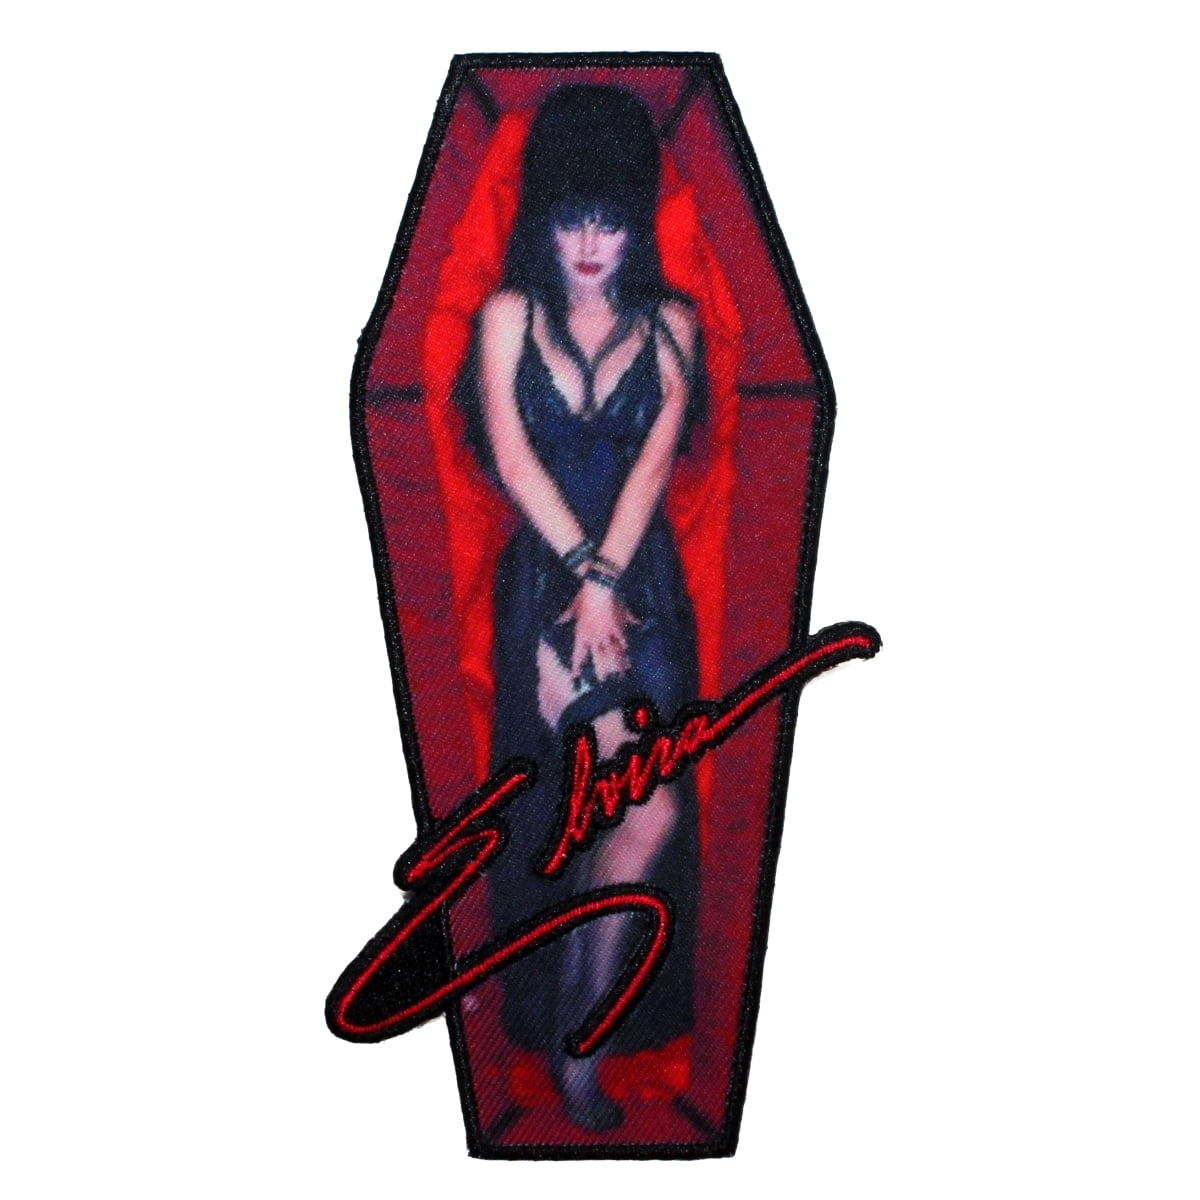 Elvira Mistress of the Dark Coffin Sexy Horror Hostess Iron On Applique  Patch 